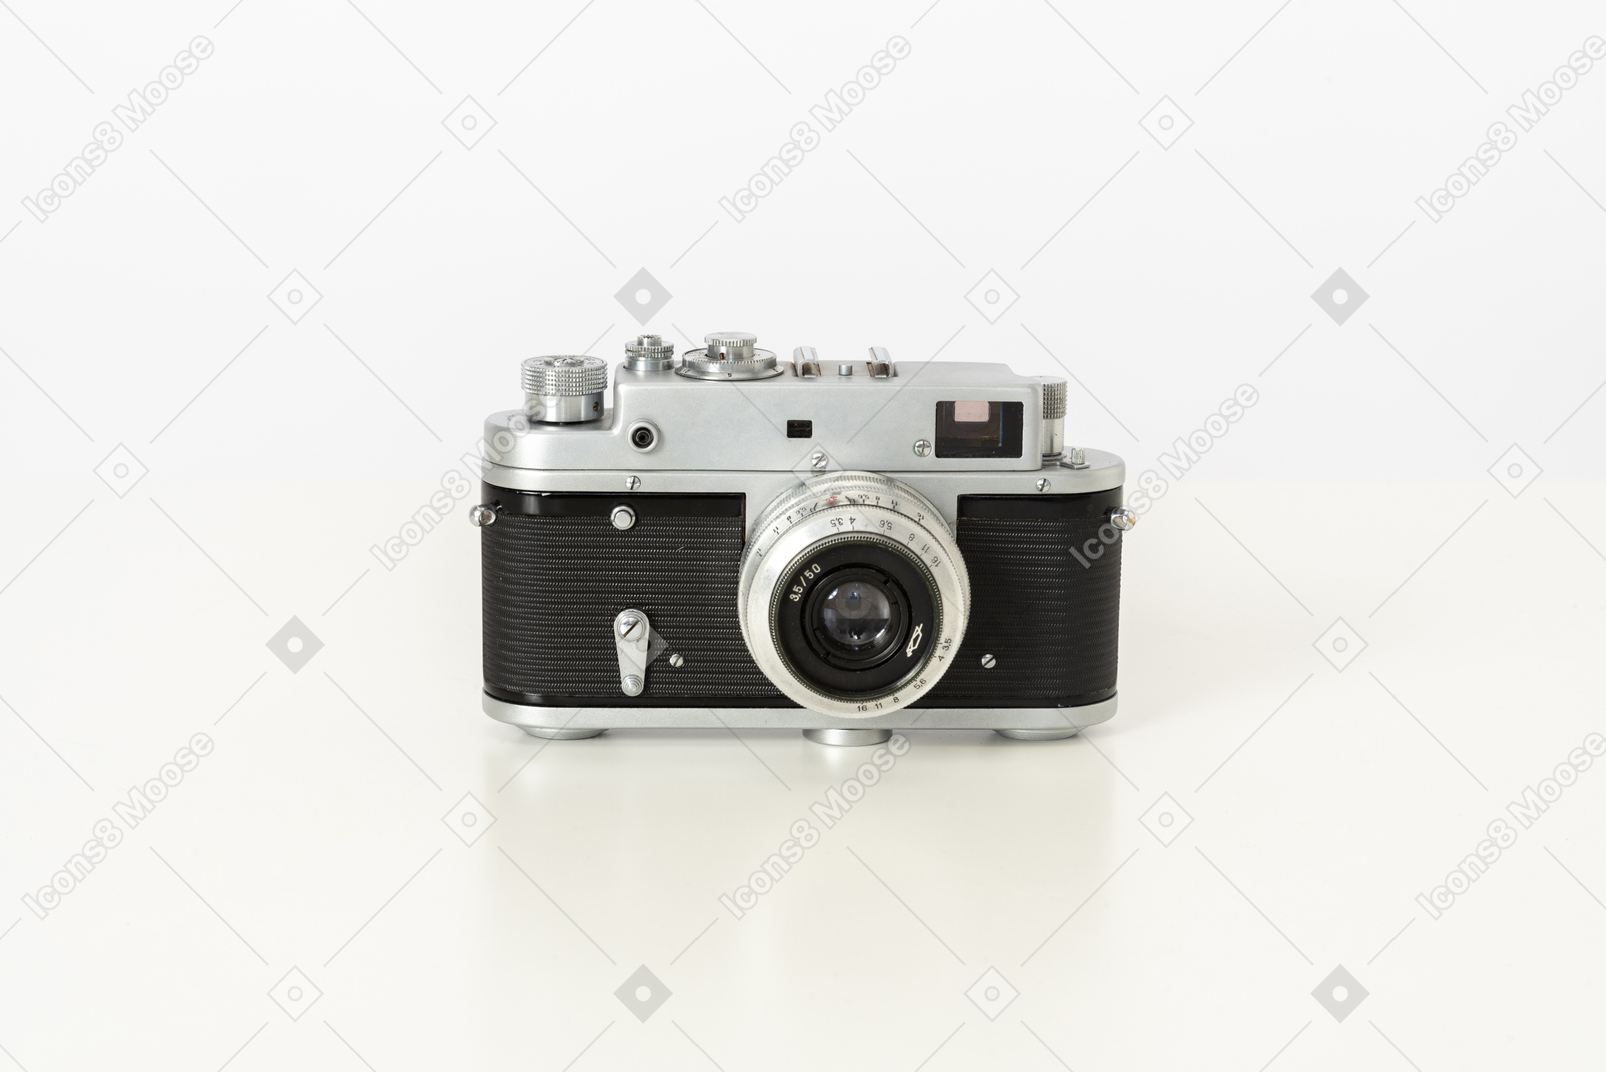 Photo camera on a white background